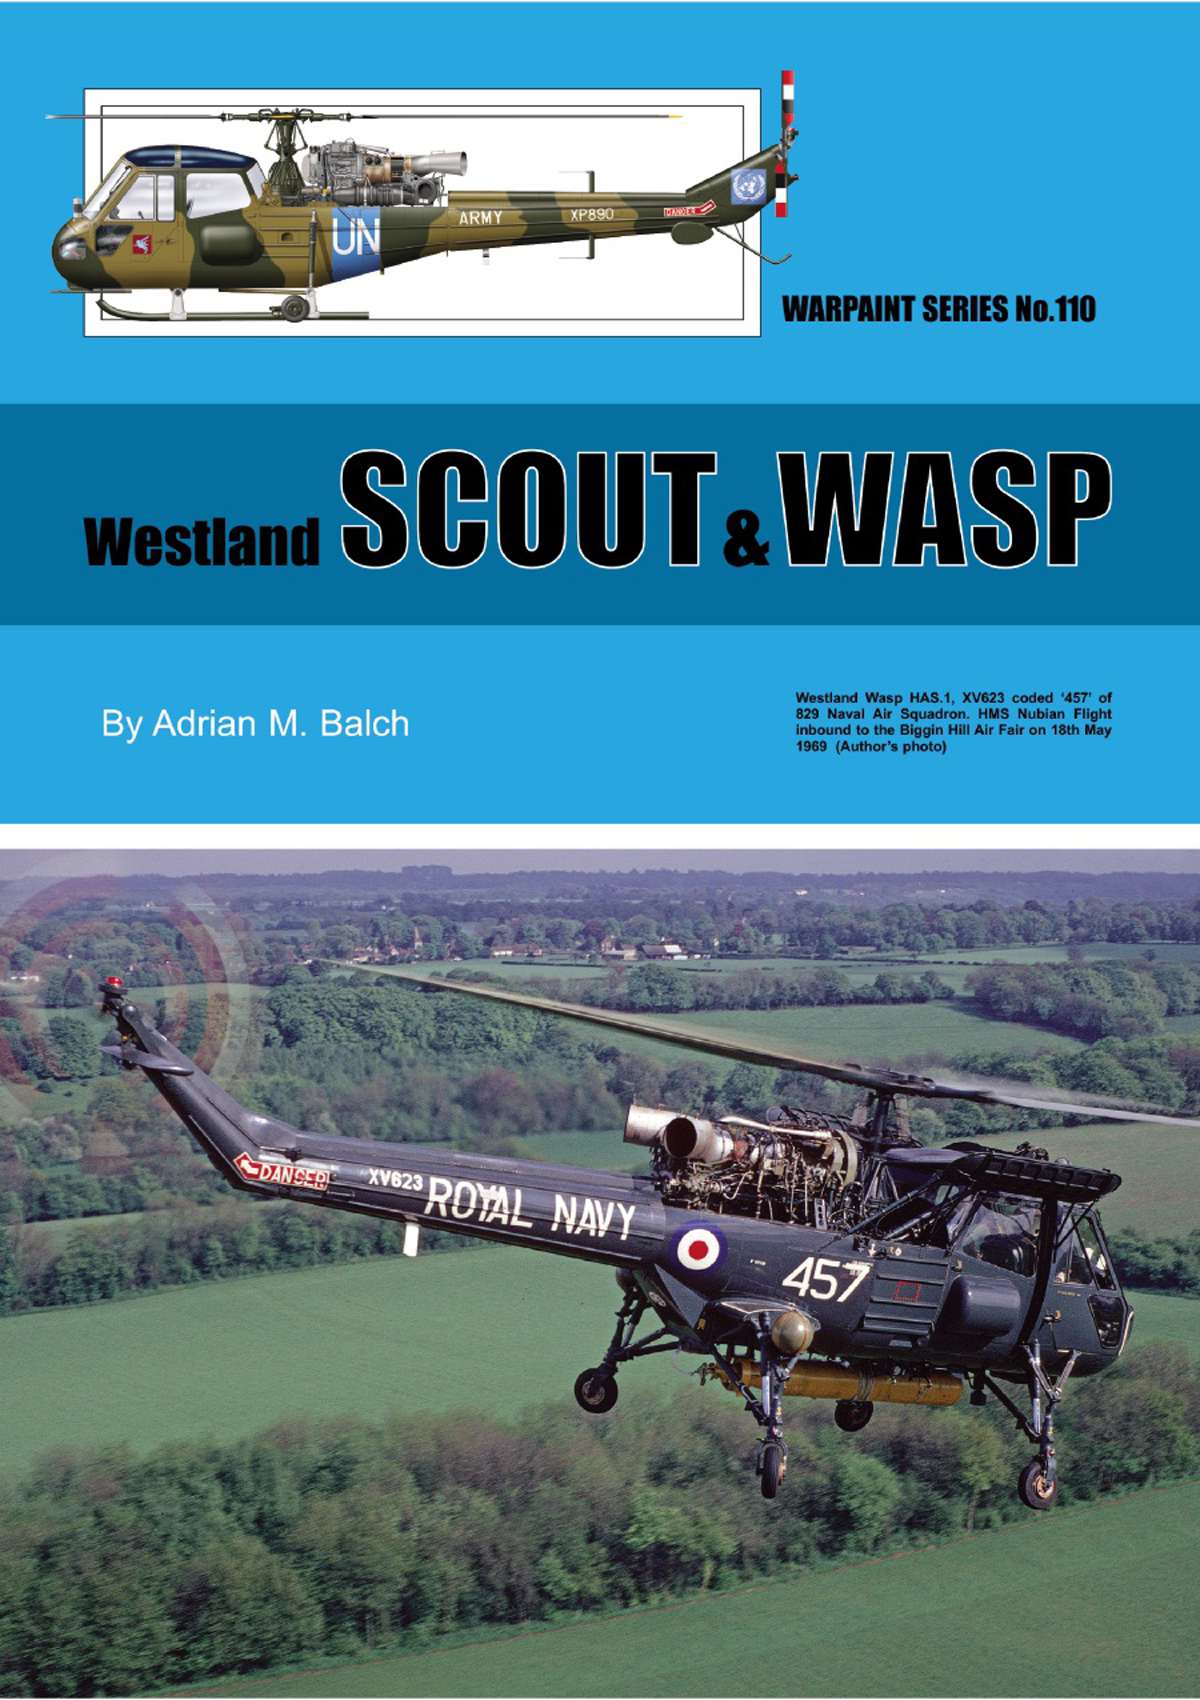 N110 - Westland Scout & Wasp